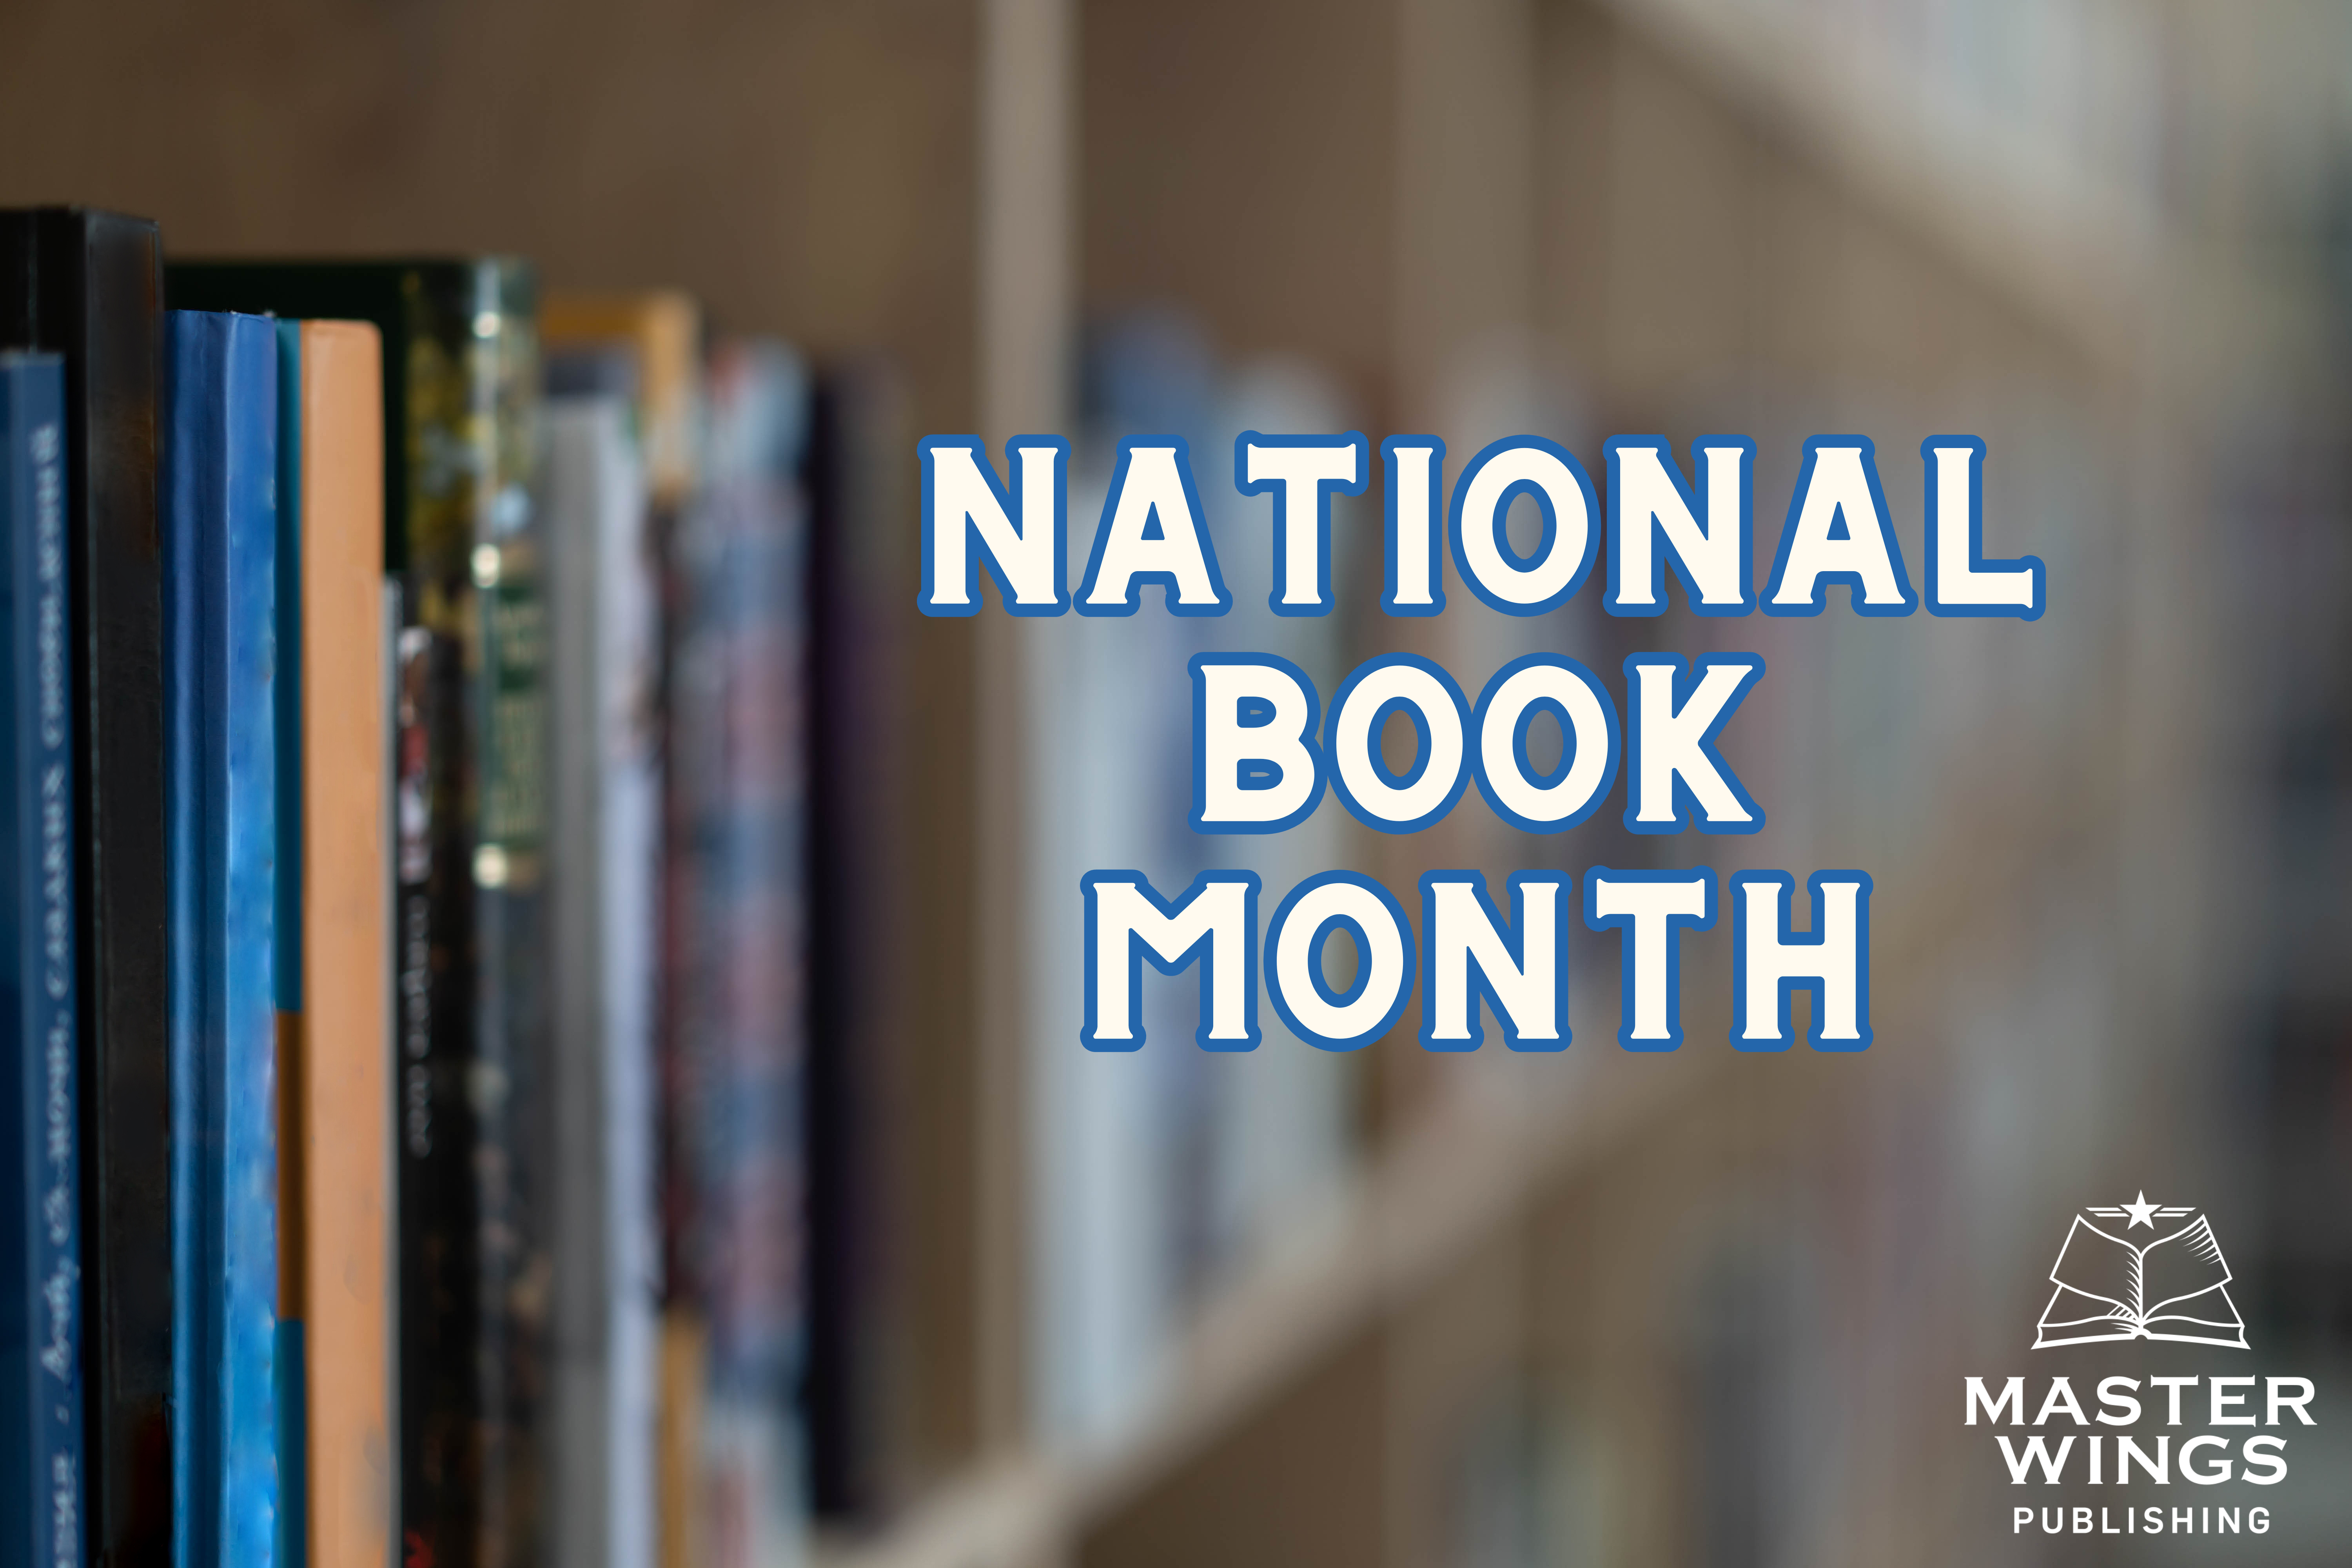 Master Wings Publishing Celebrates National Book Month